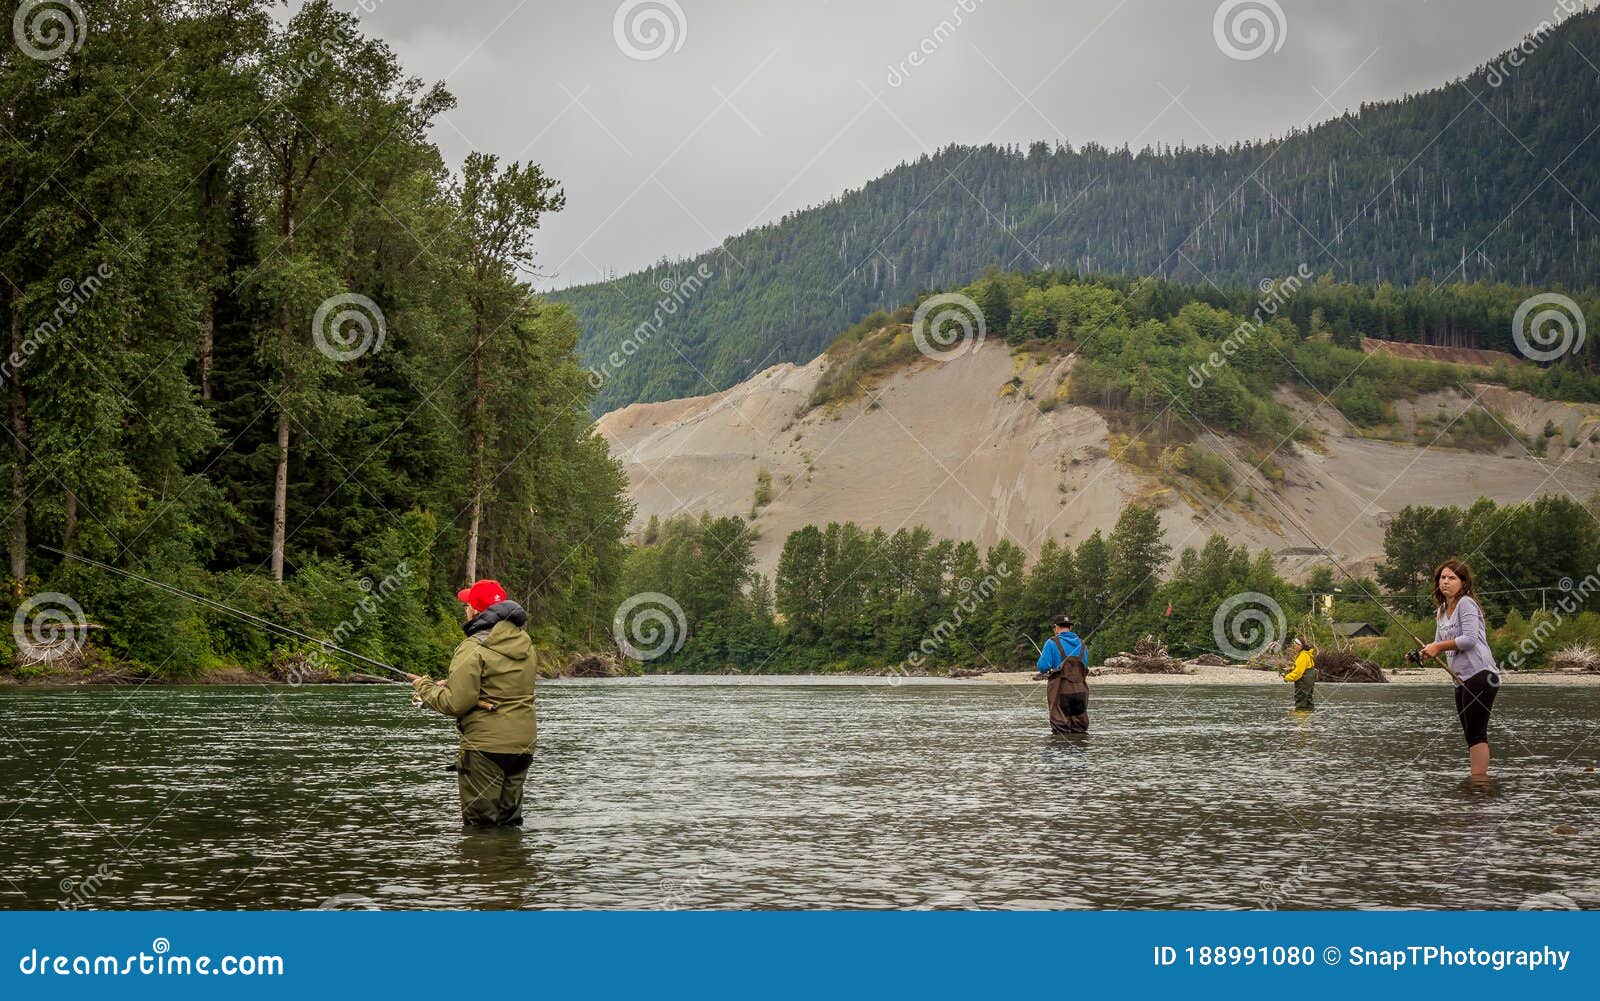 294 British Columbia Fishing People Stock Photos - Free & Royalty